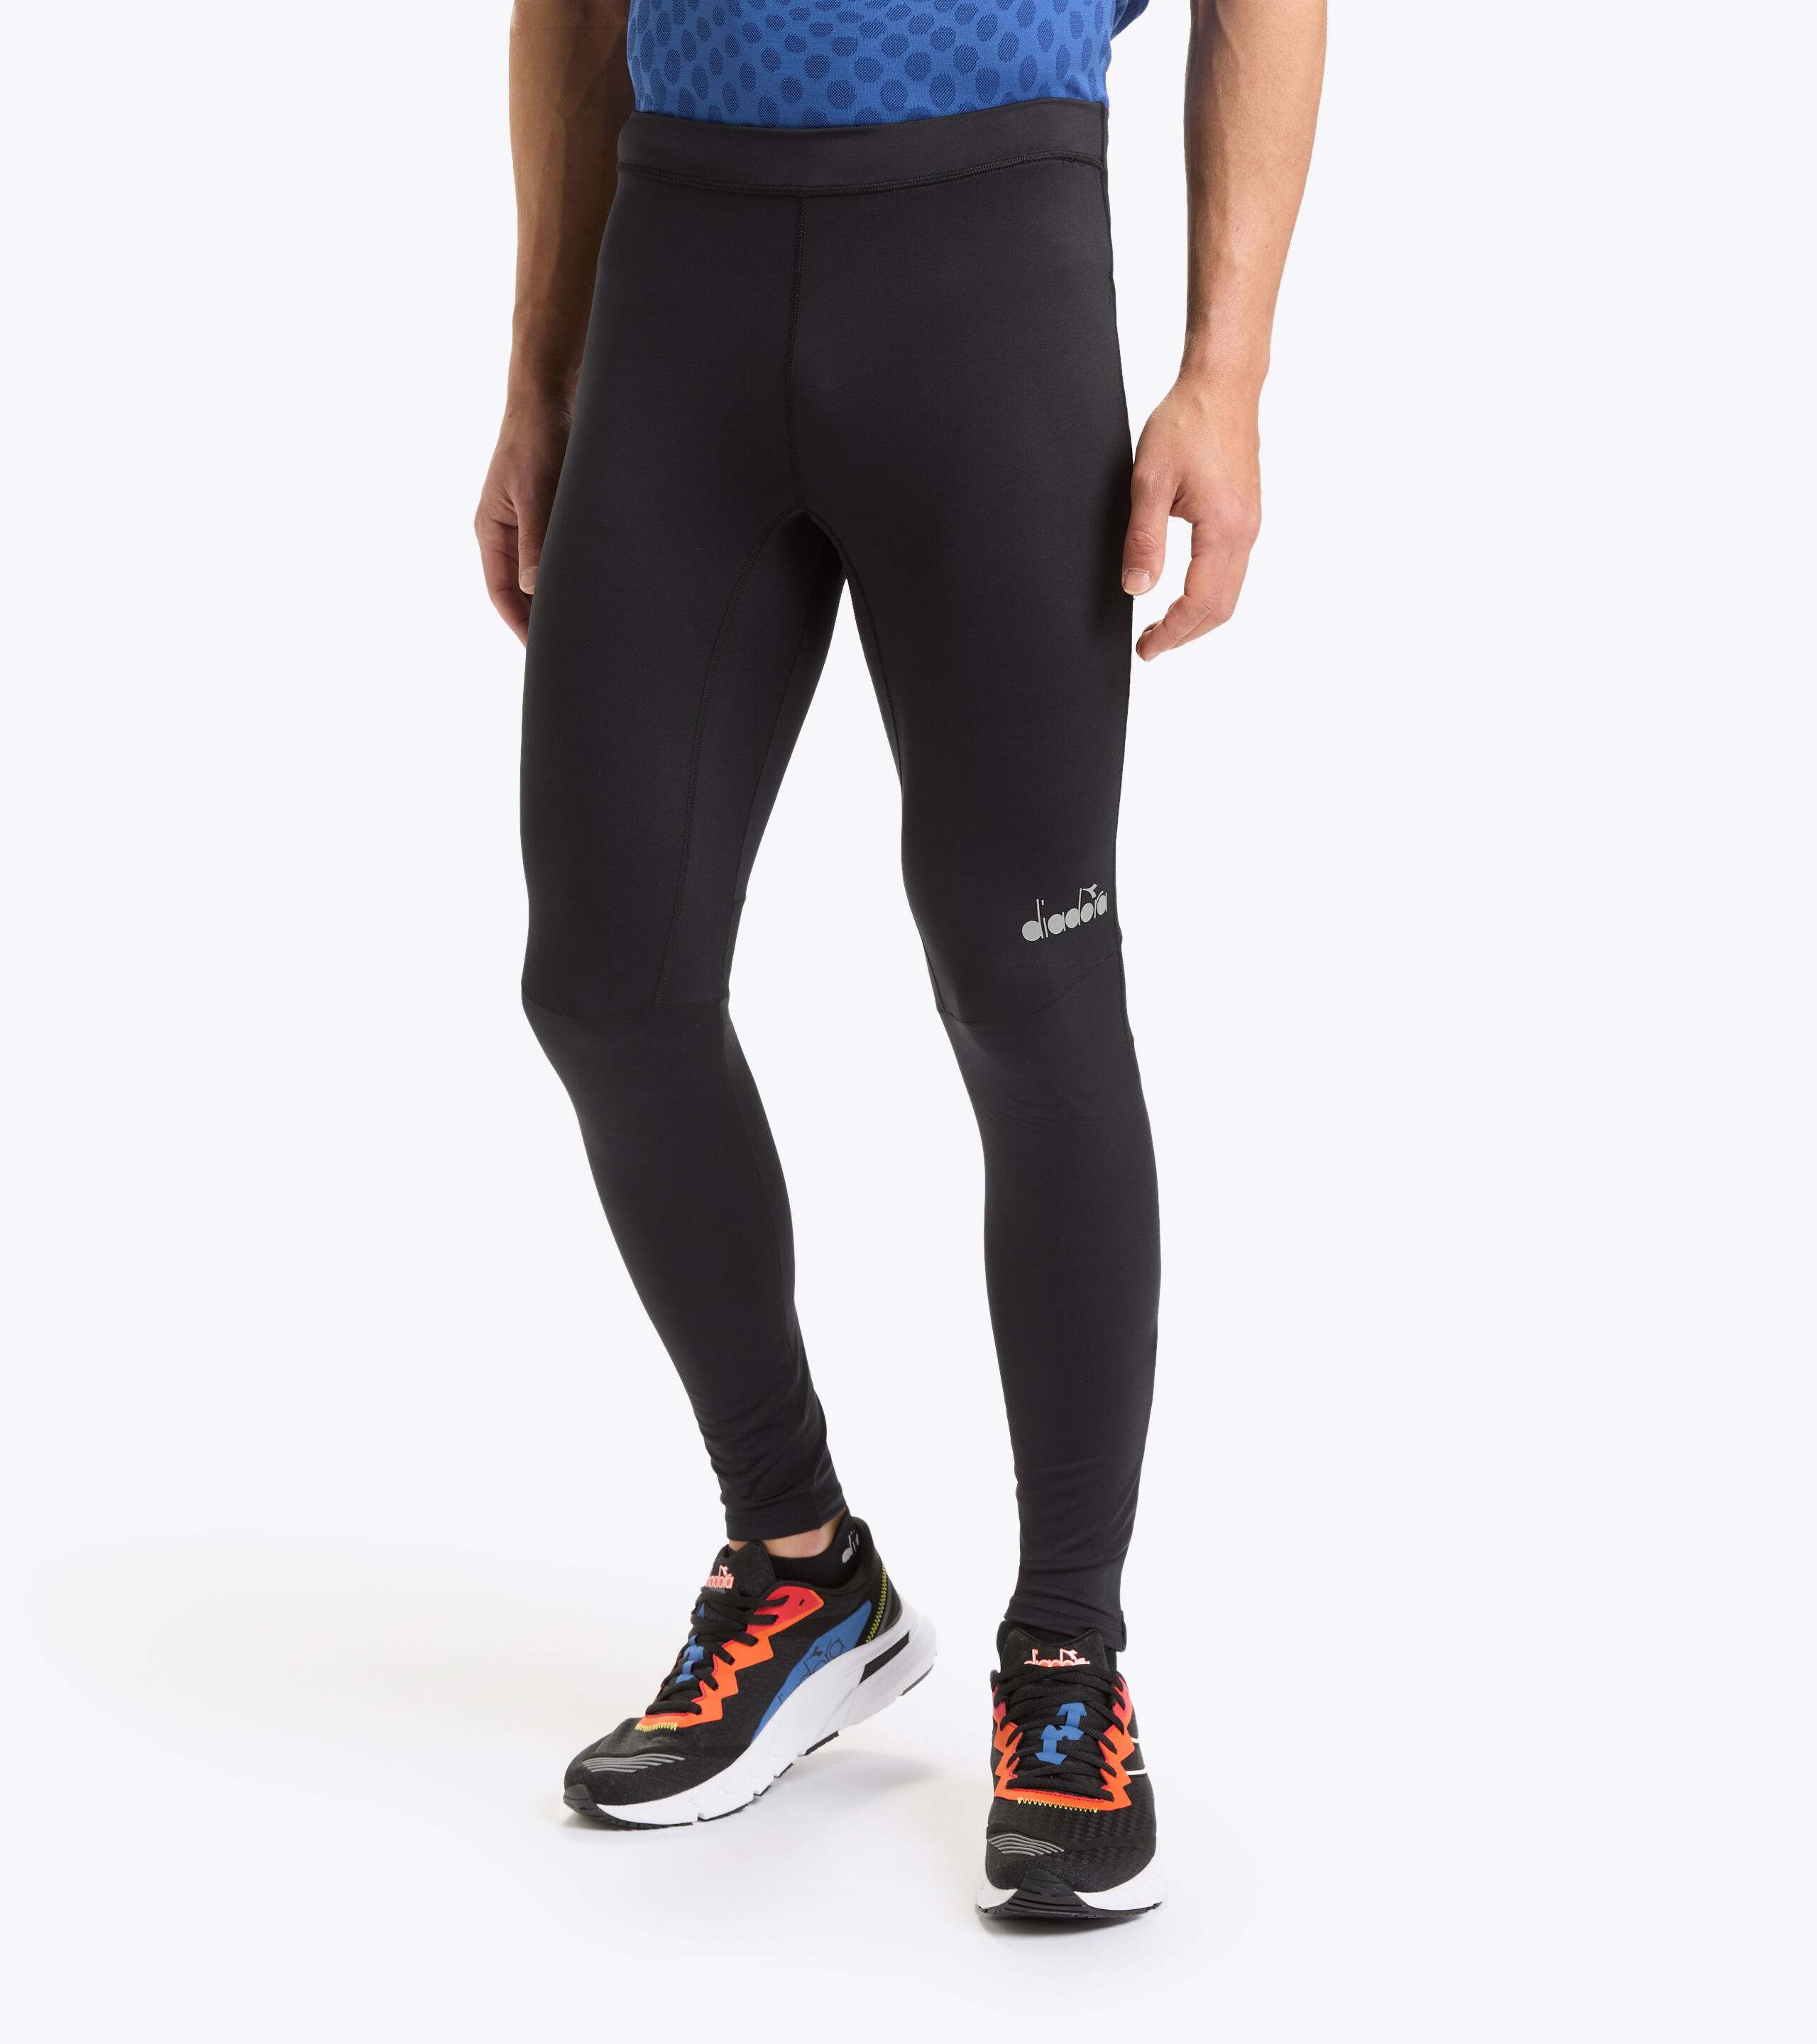 BALEAF Men's Thermal Fleece Running Tights Water Resistant Cycling Pants  Zipper Legs Pockets Cold Weather Hiking Black Size XXL - Walmart.com